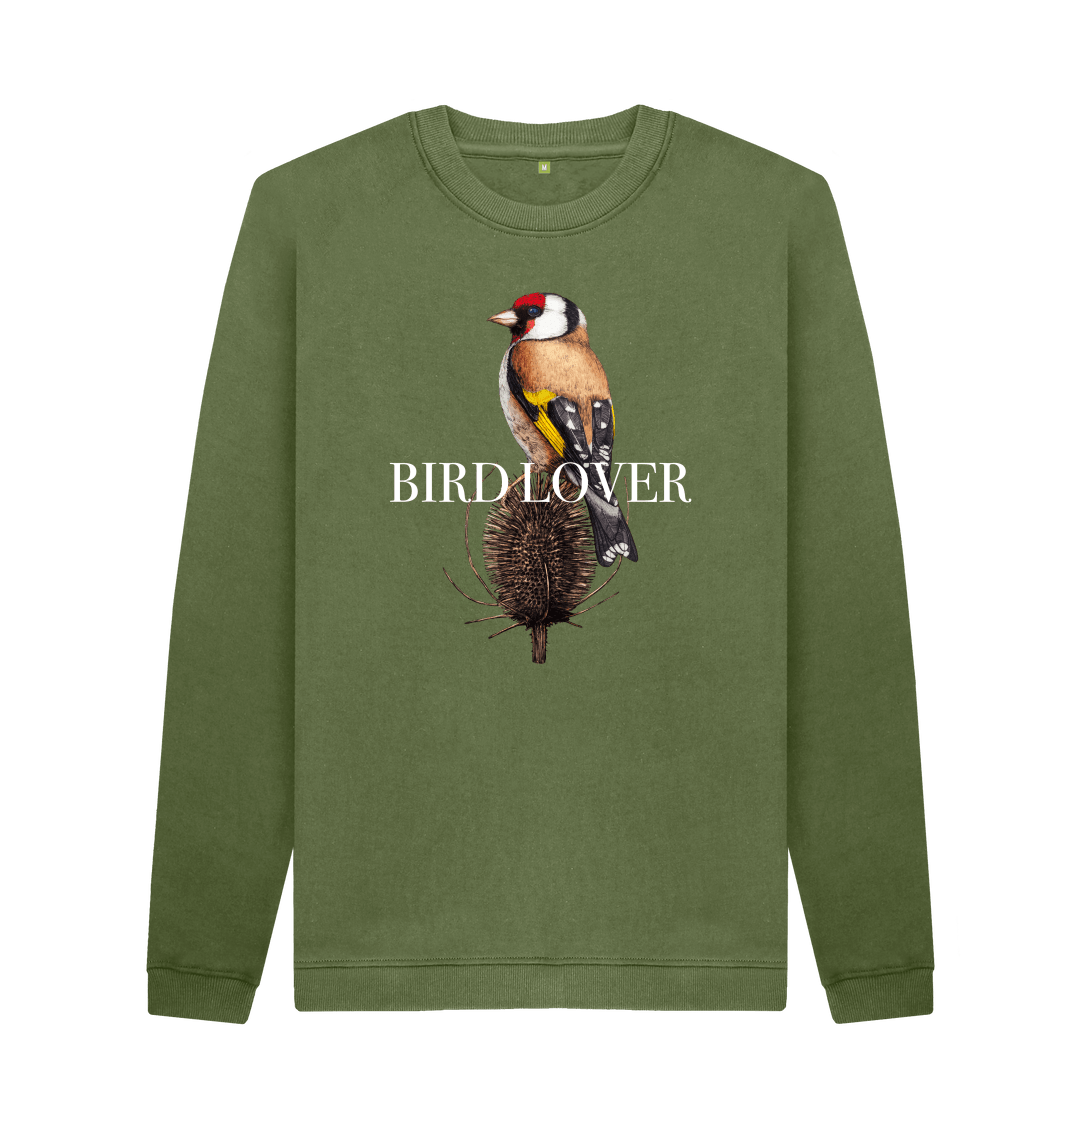 Swallow Bird, The Flight Virtuoso, Design for Birds Lovers T-Shirt